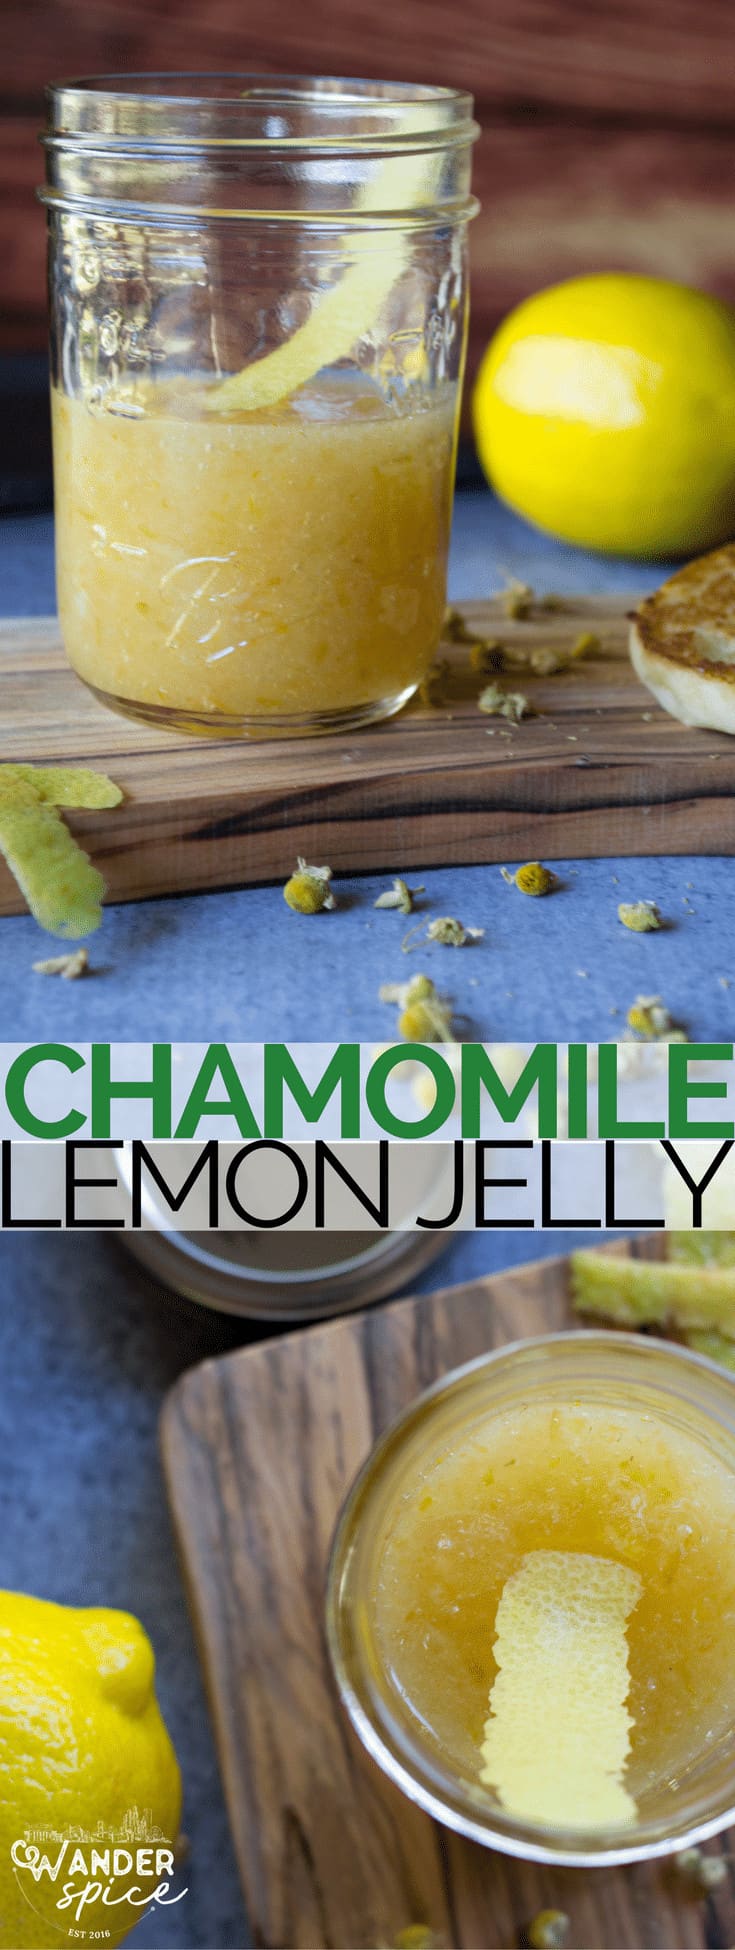 Lemon Jelly with Chamomile